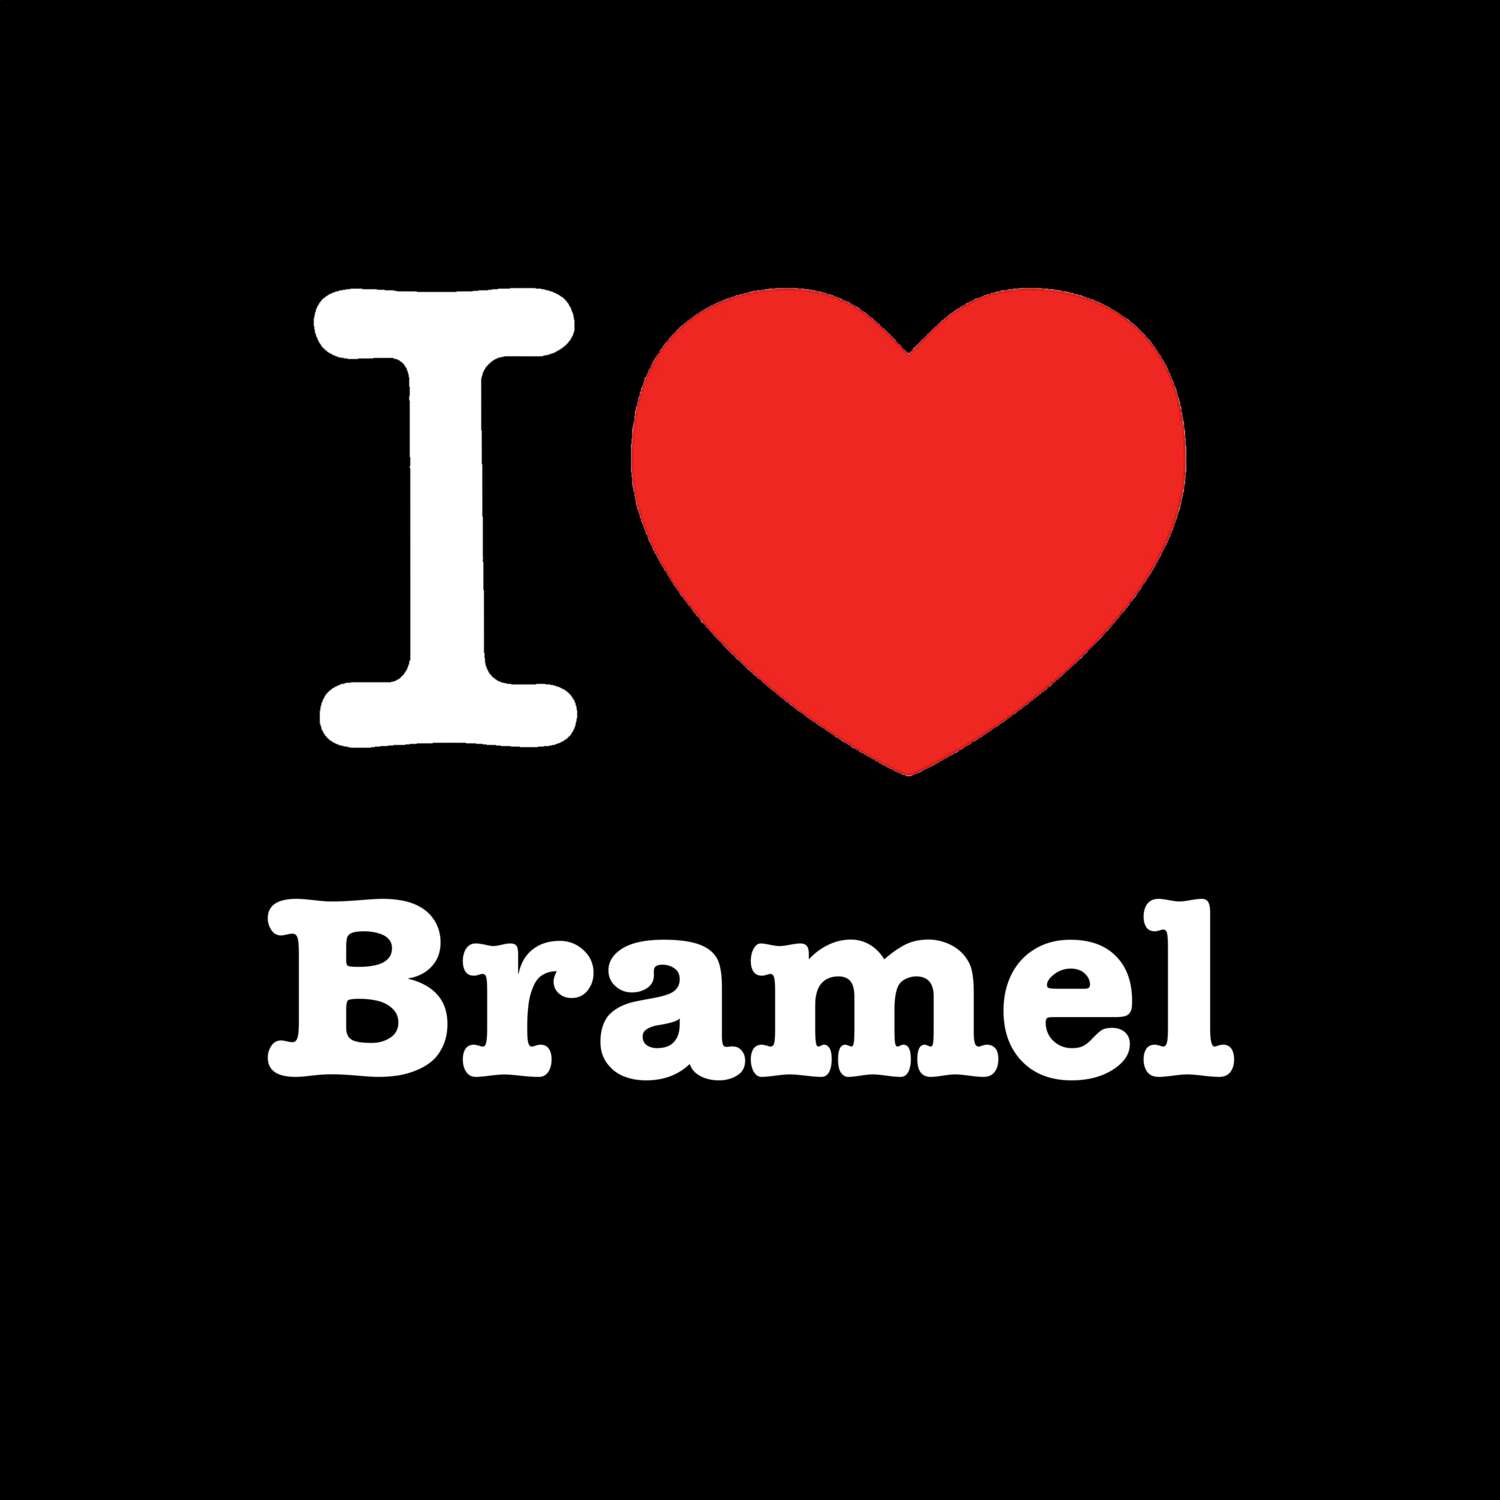 Bramel T-Shirt »I love«